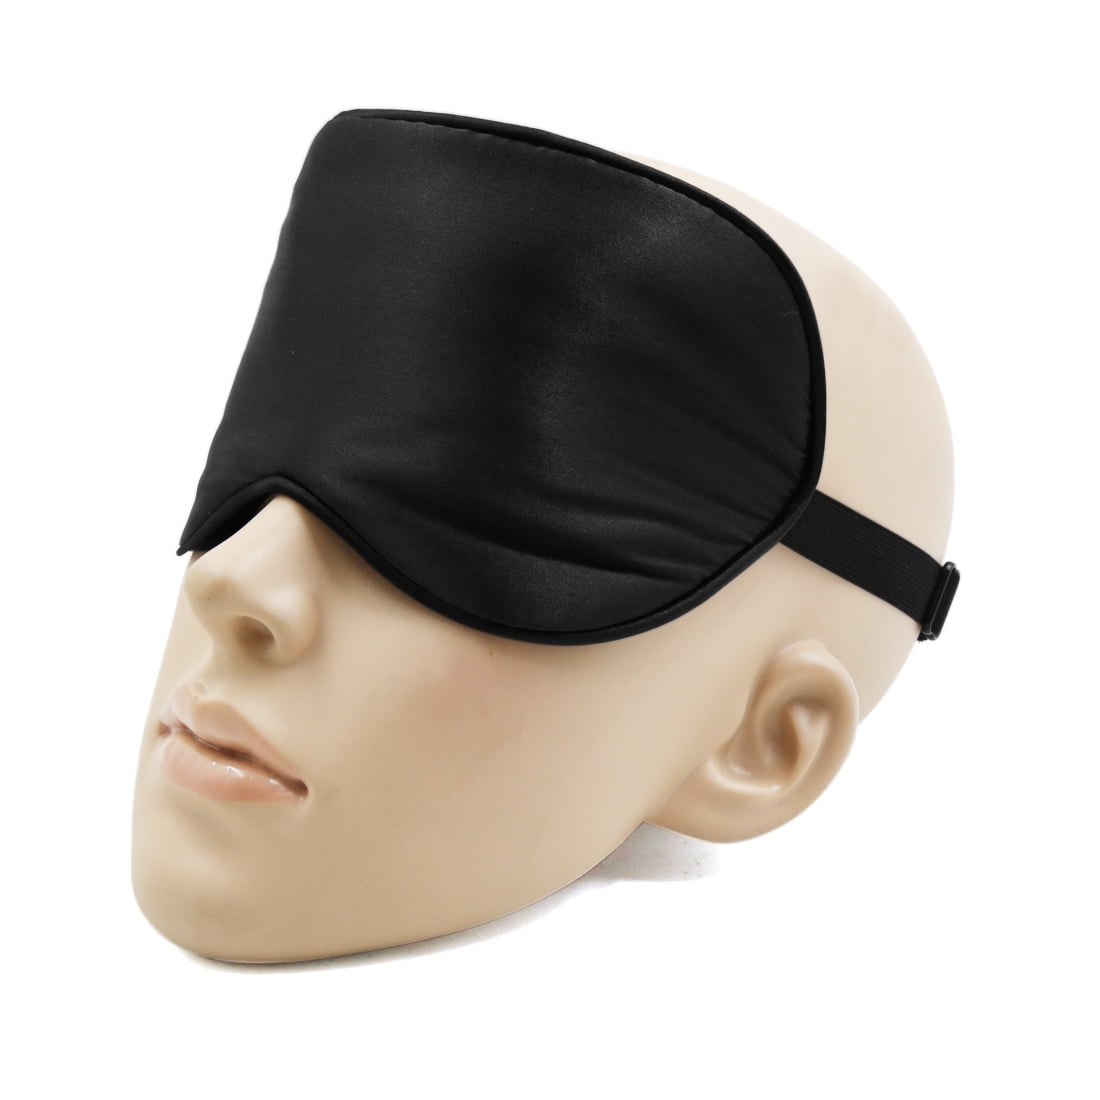 Silk Travel Eye Mask Rest Relax Eyes Pad Sleeping Shade Cover Blindfold Black Walmart Canada